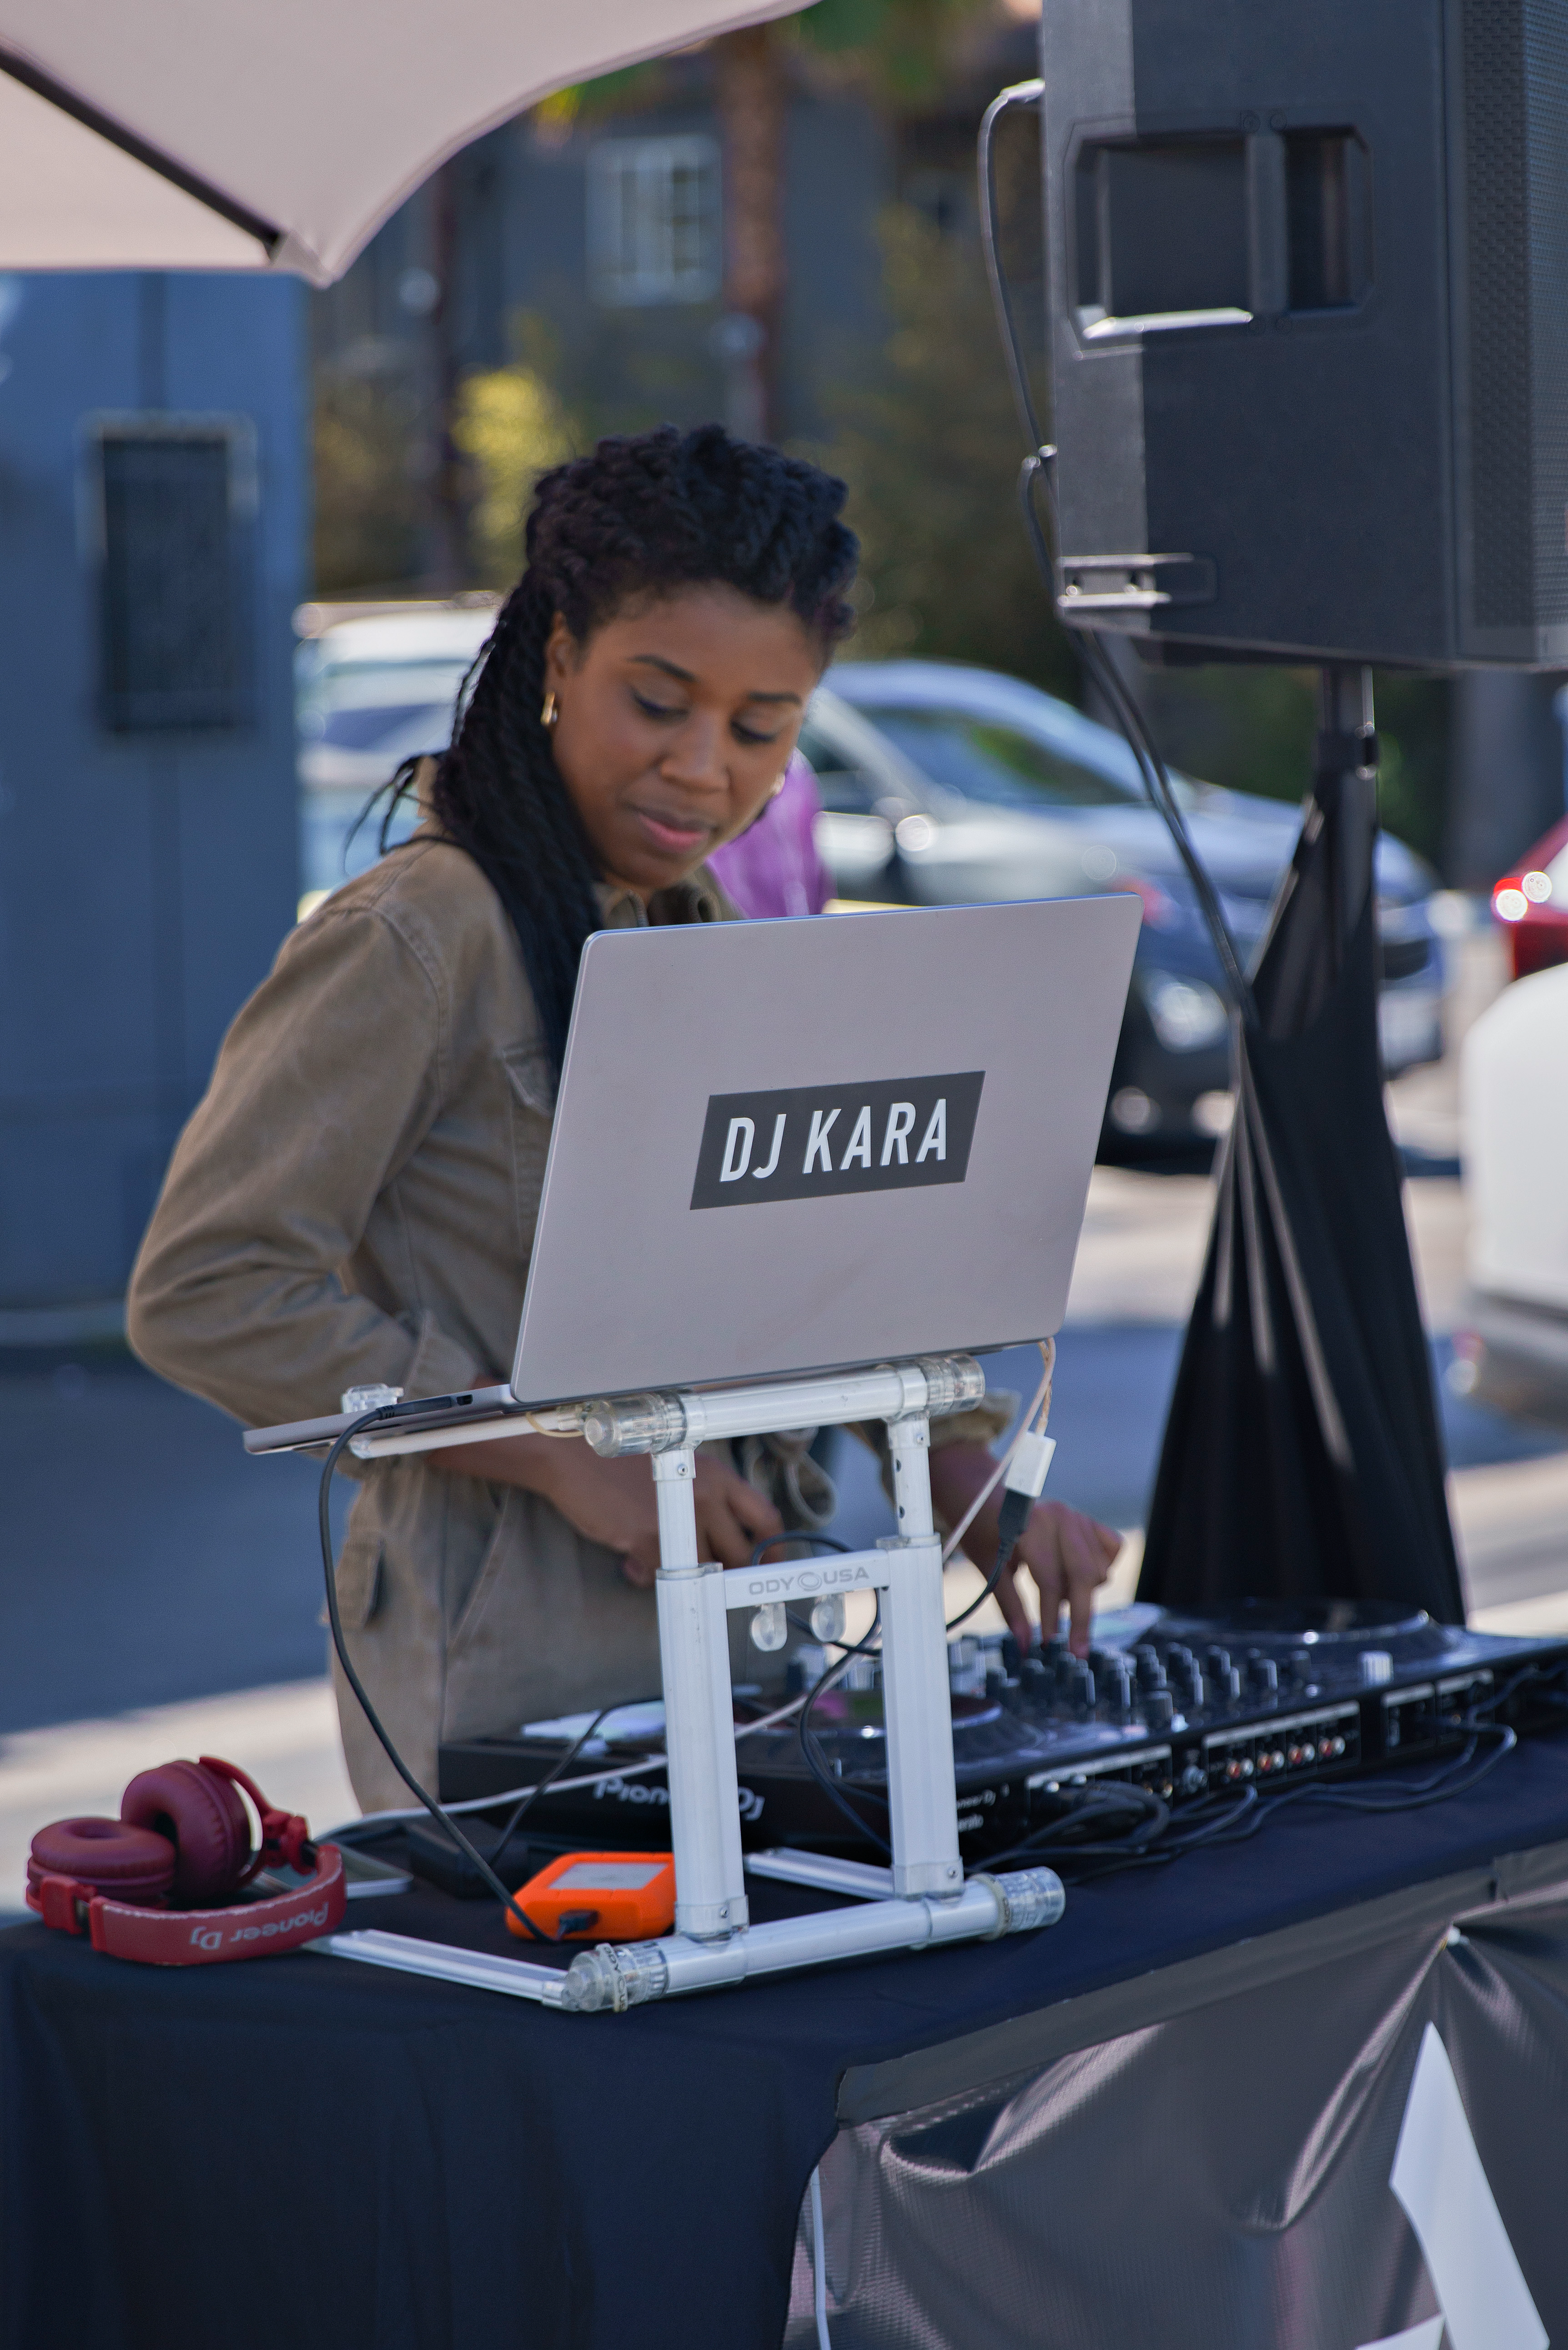 Brighter Community Venice Beach DJ Kara mixing music at event